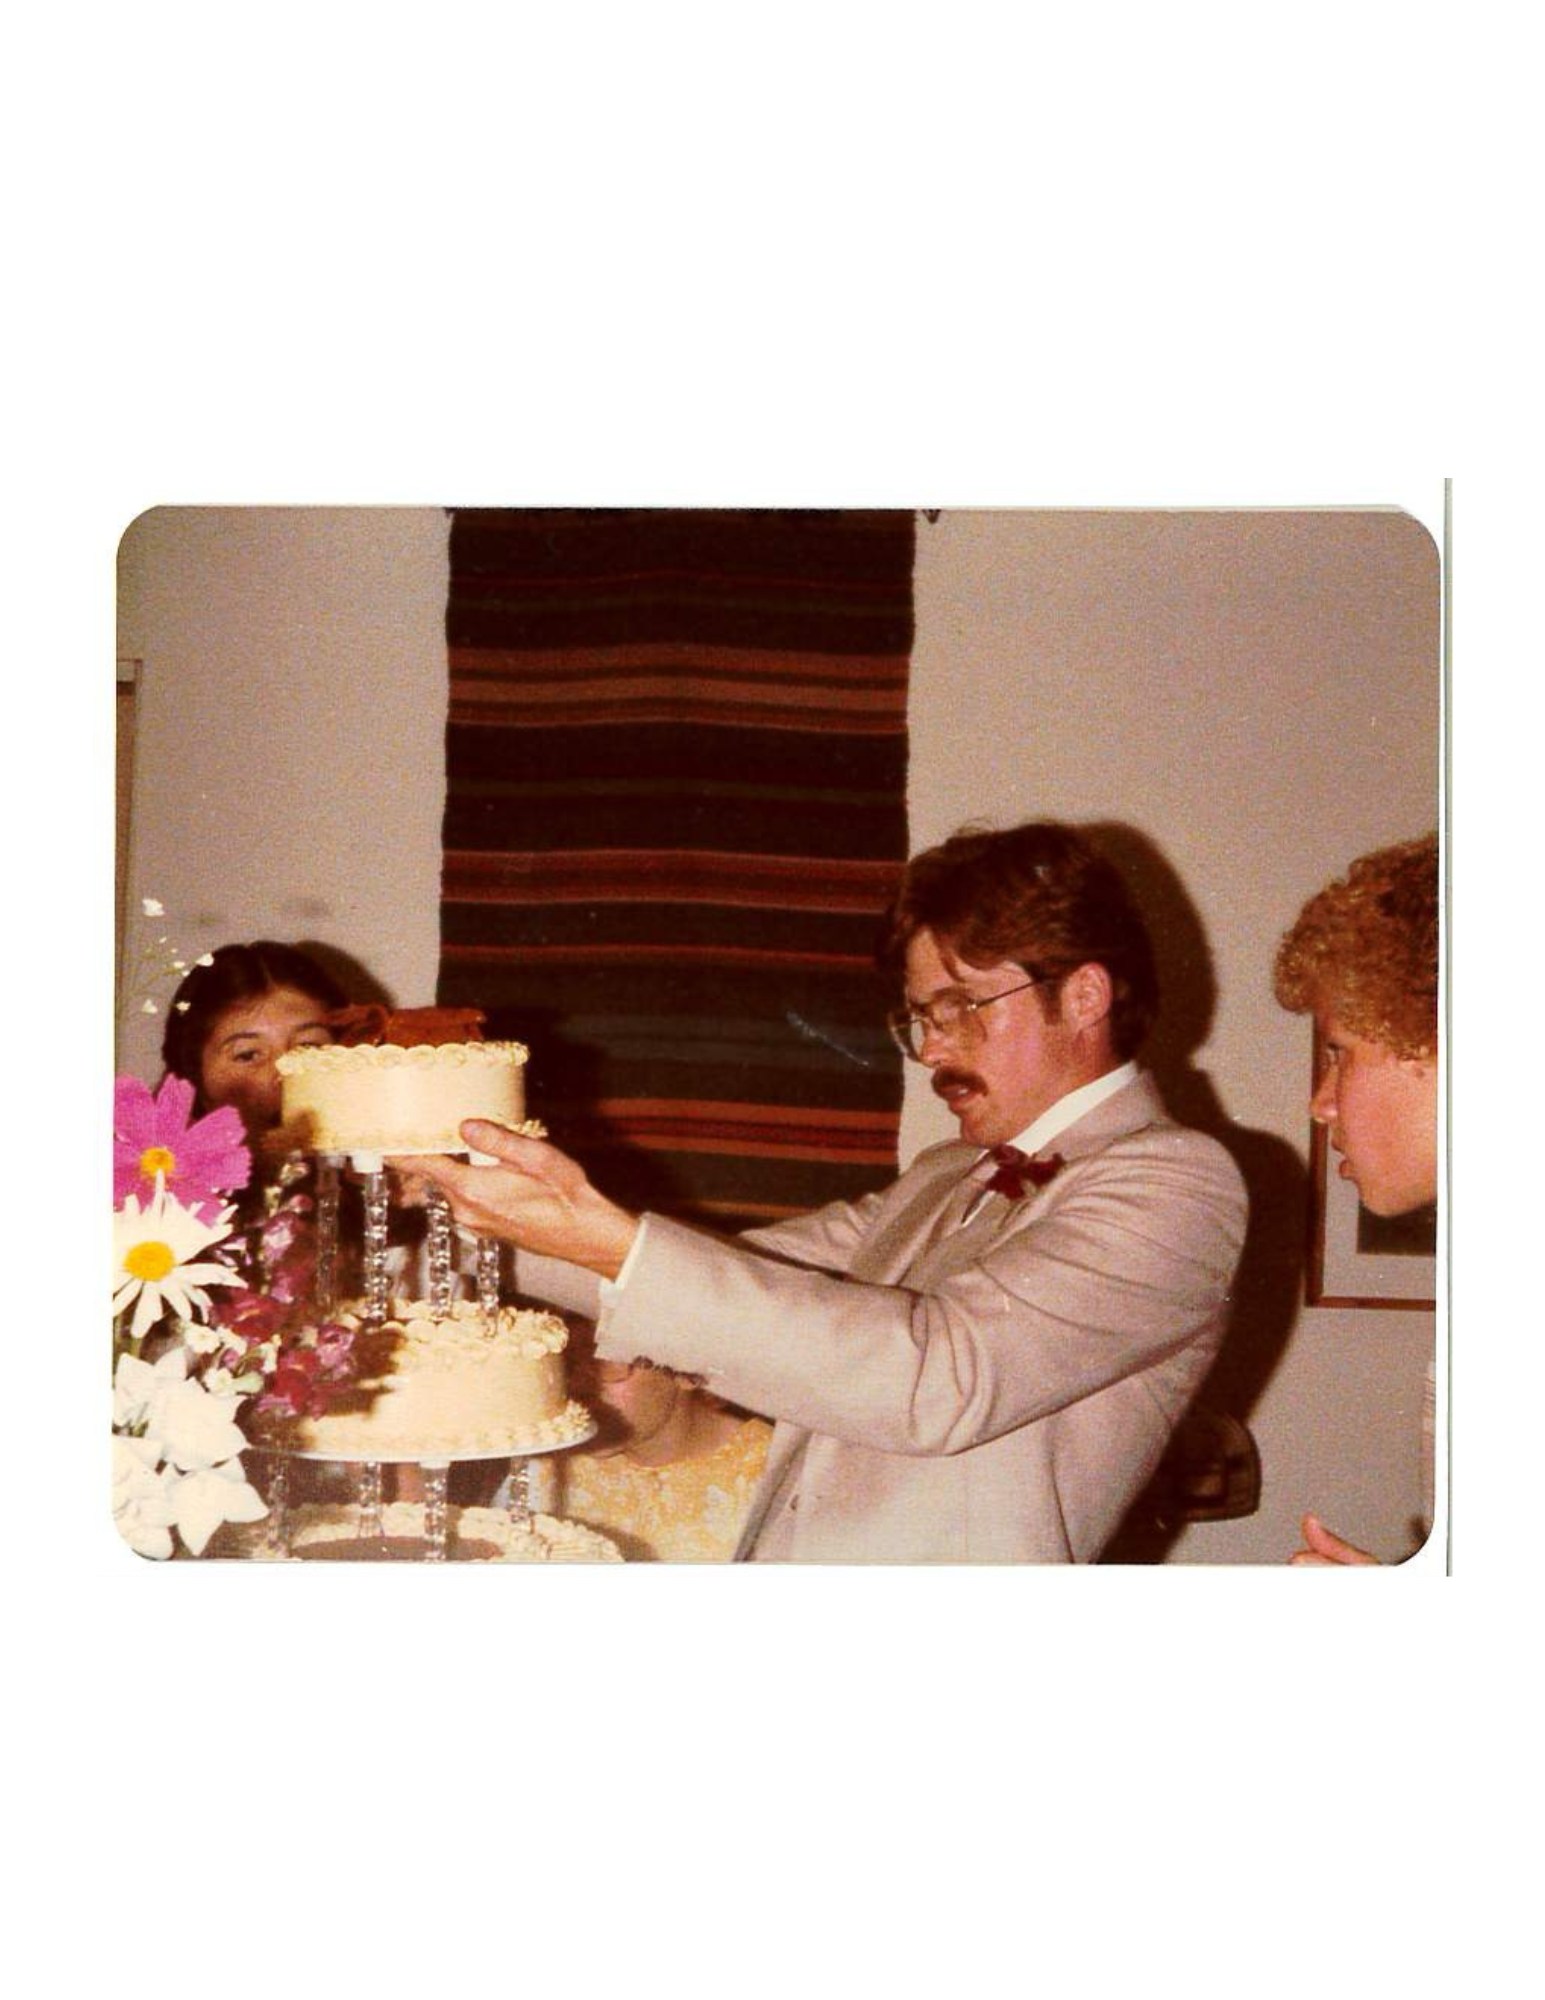 Rick and Deann's Wedding Ceremony, 1979